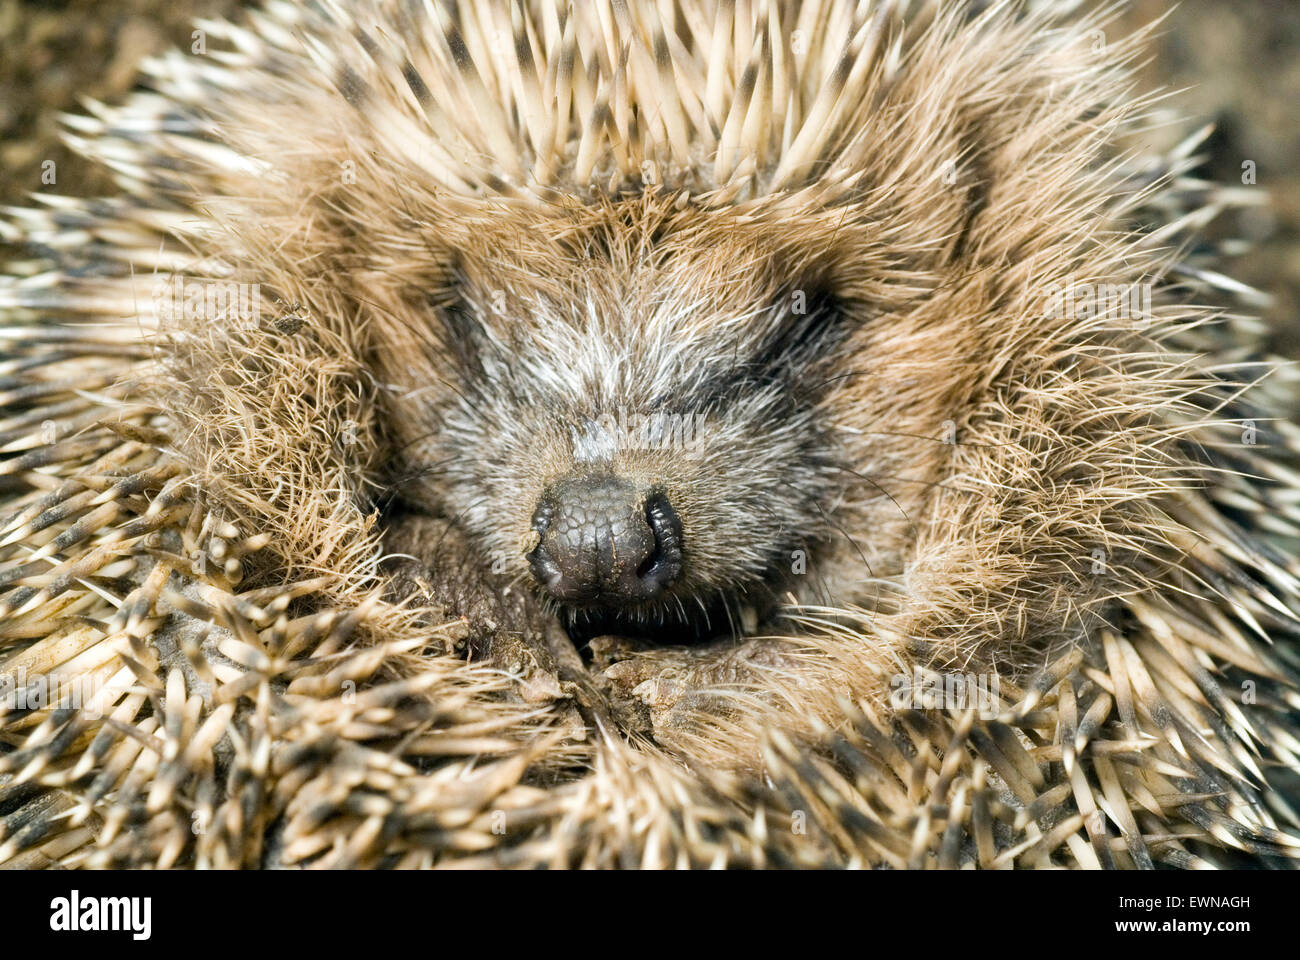 Little Hedgehog (Erinaceus europaeus) rolled up close up Stock Photo